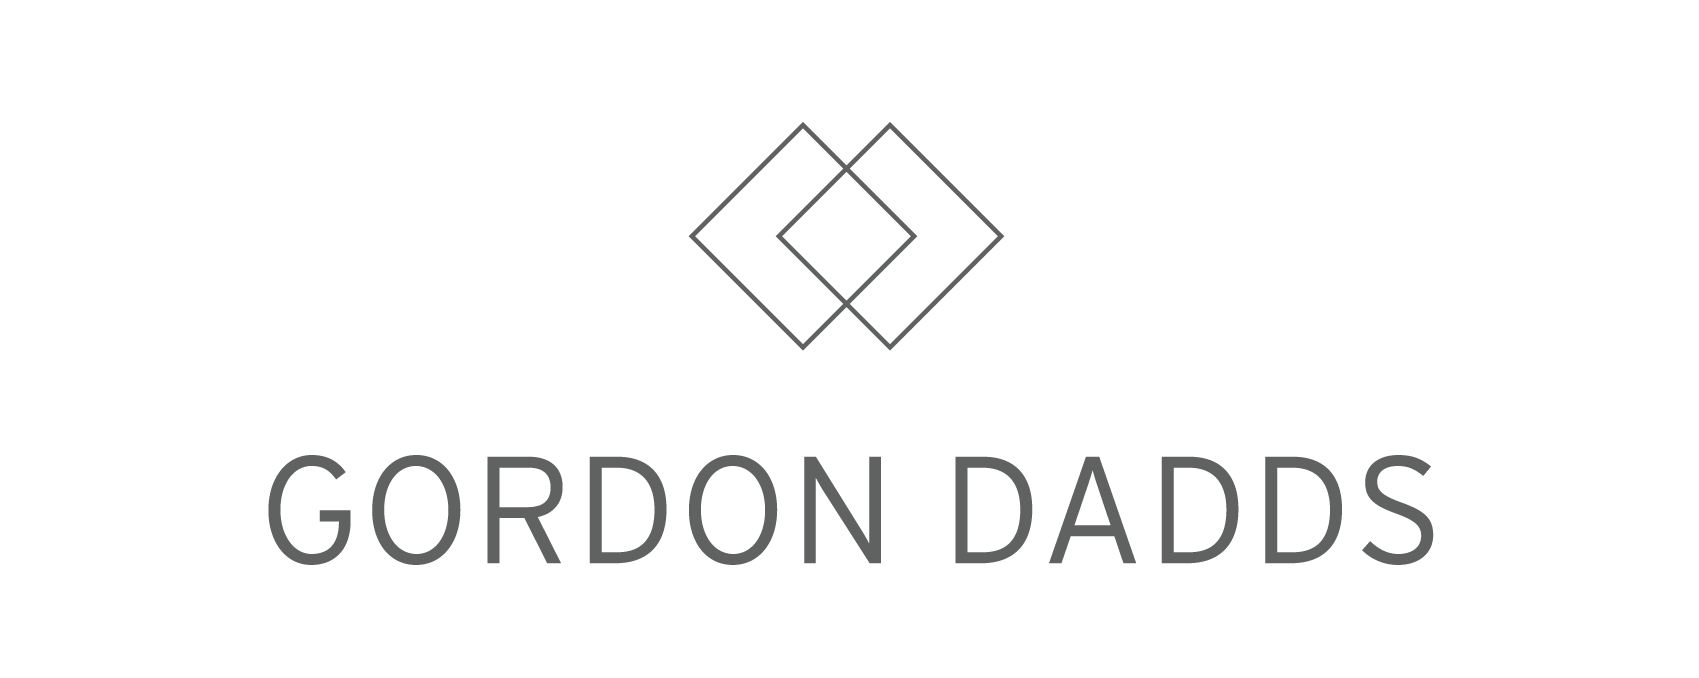 GORDON DADDS GROUP PLC